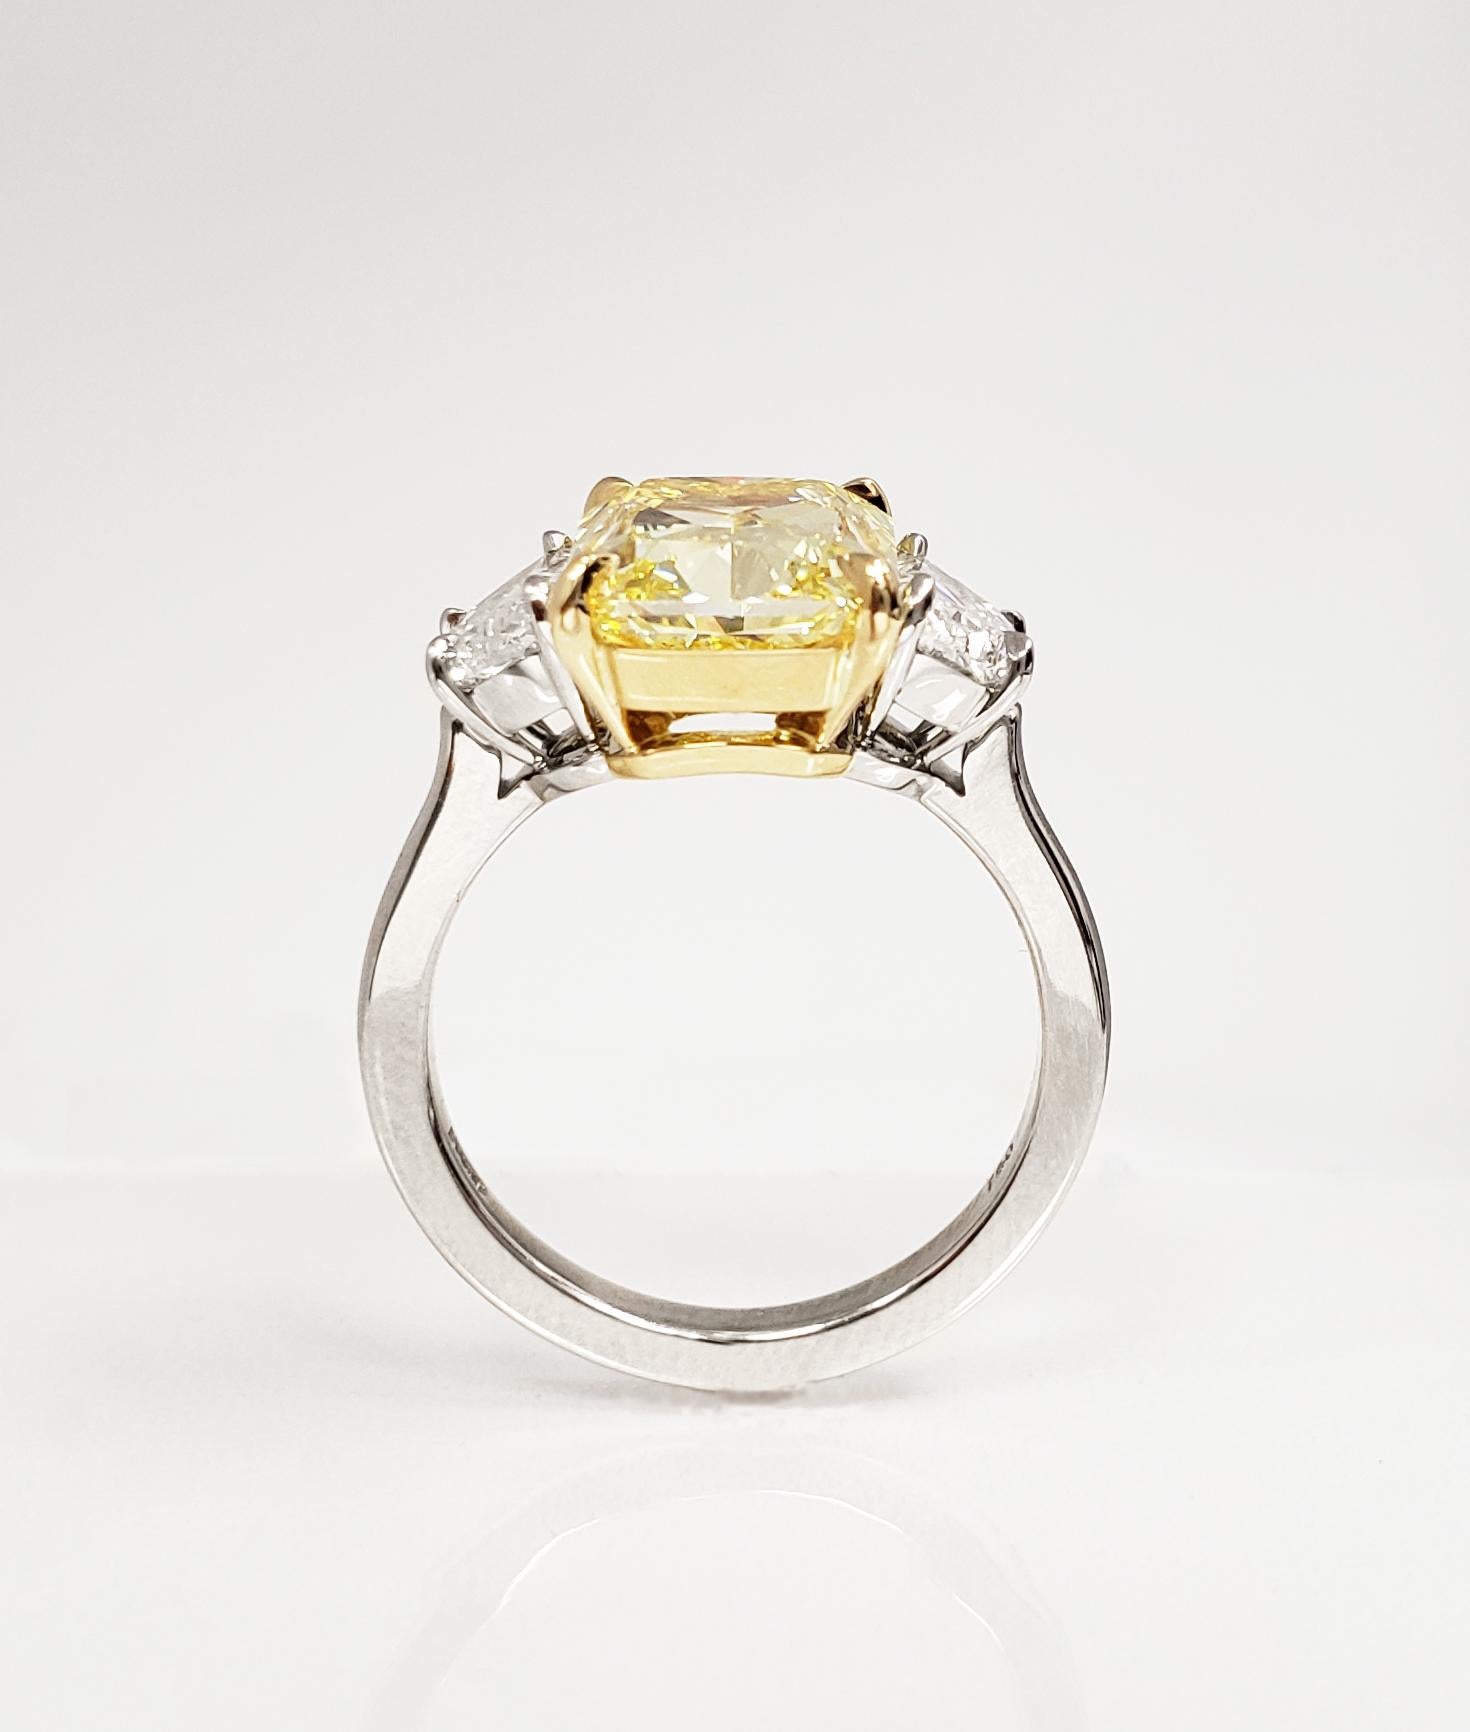 Scarselli 5 Karat Fancy Intense Yellow Diamond Ring in Platin GIA zertifiziert (Radiantschliff)